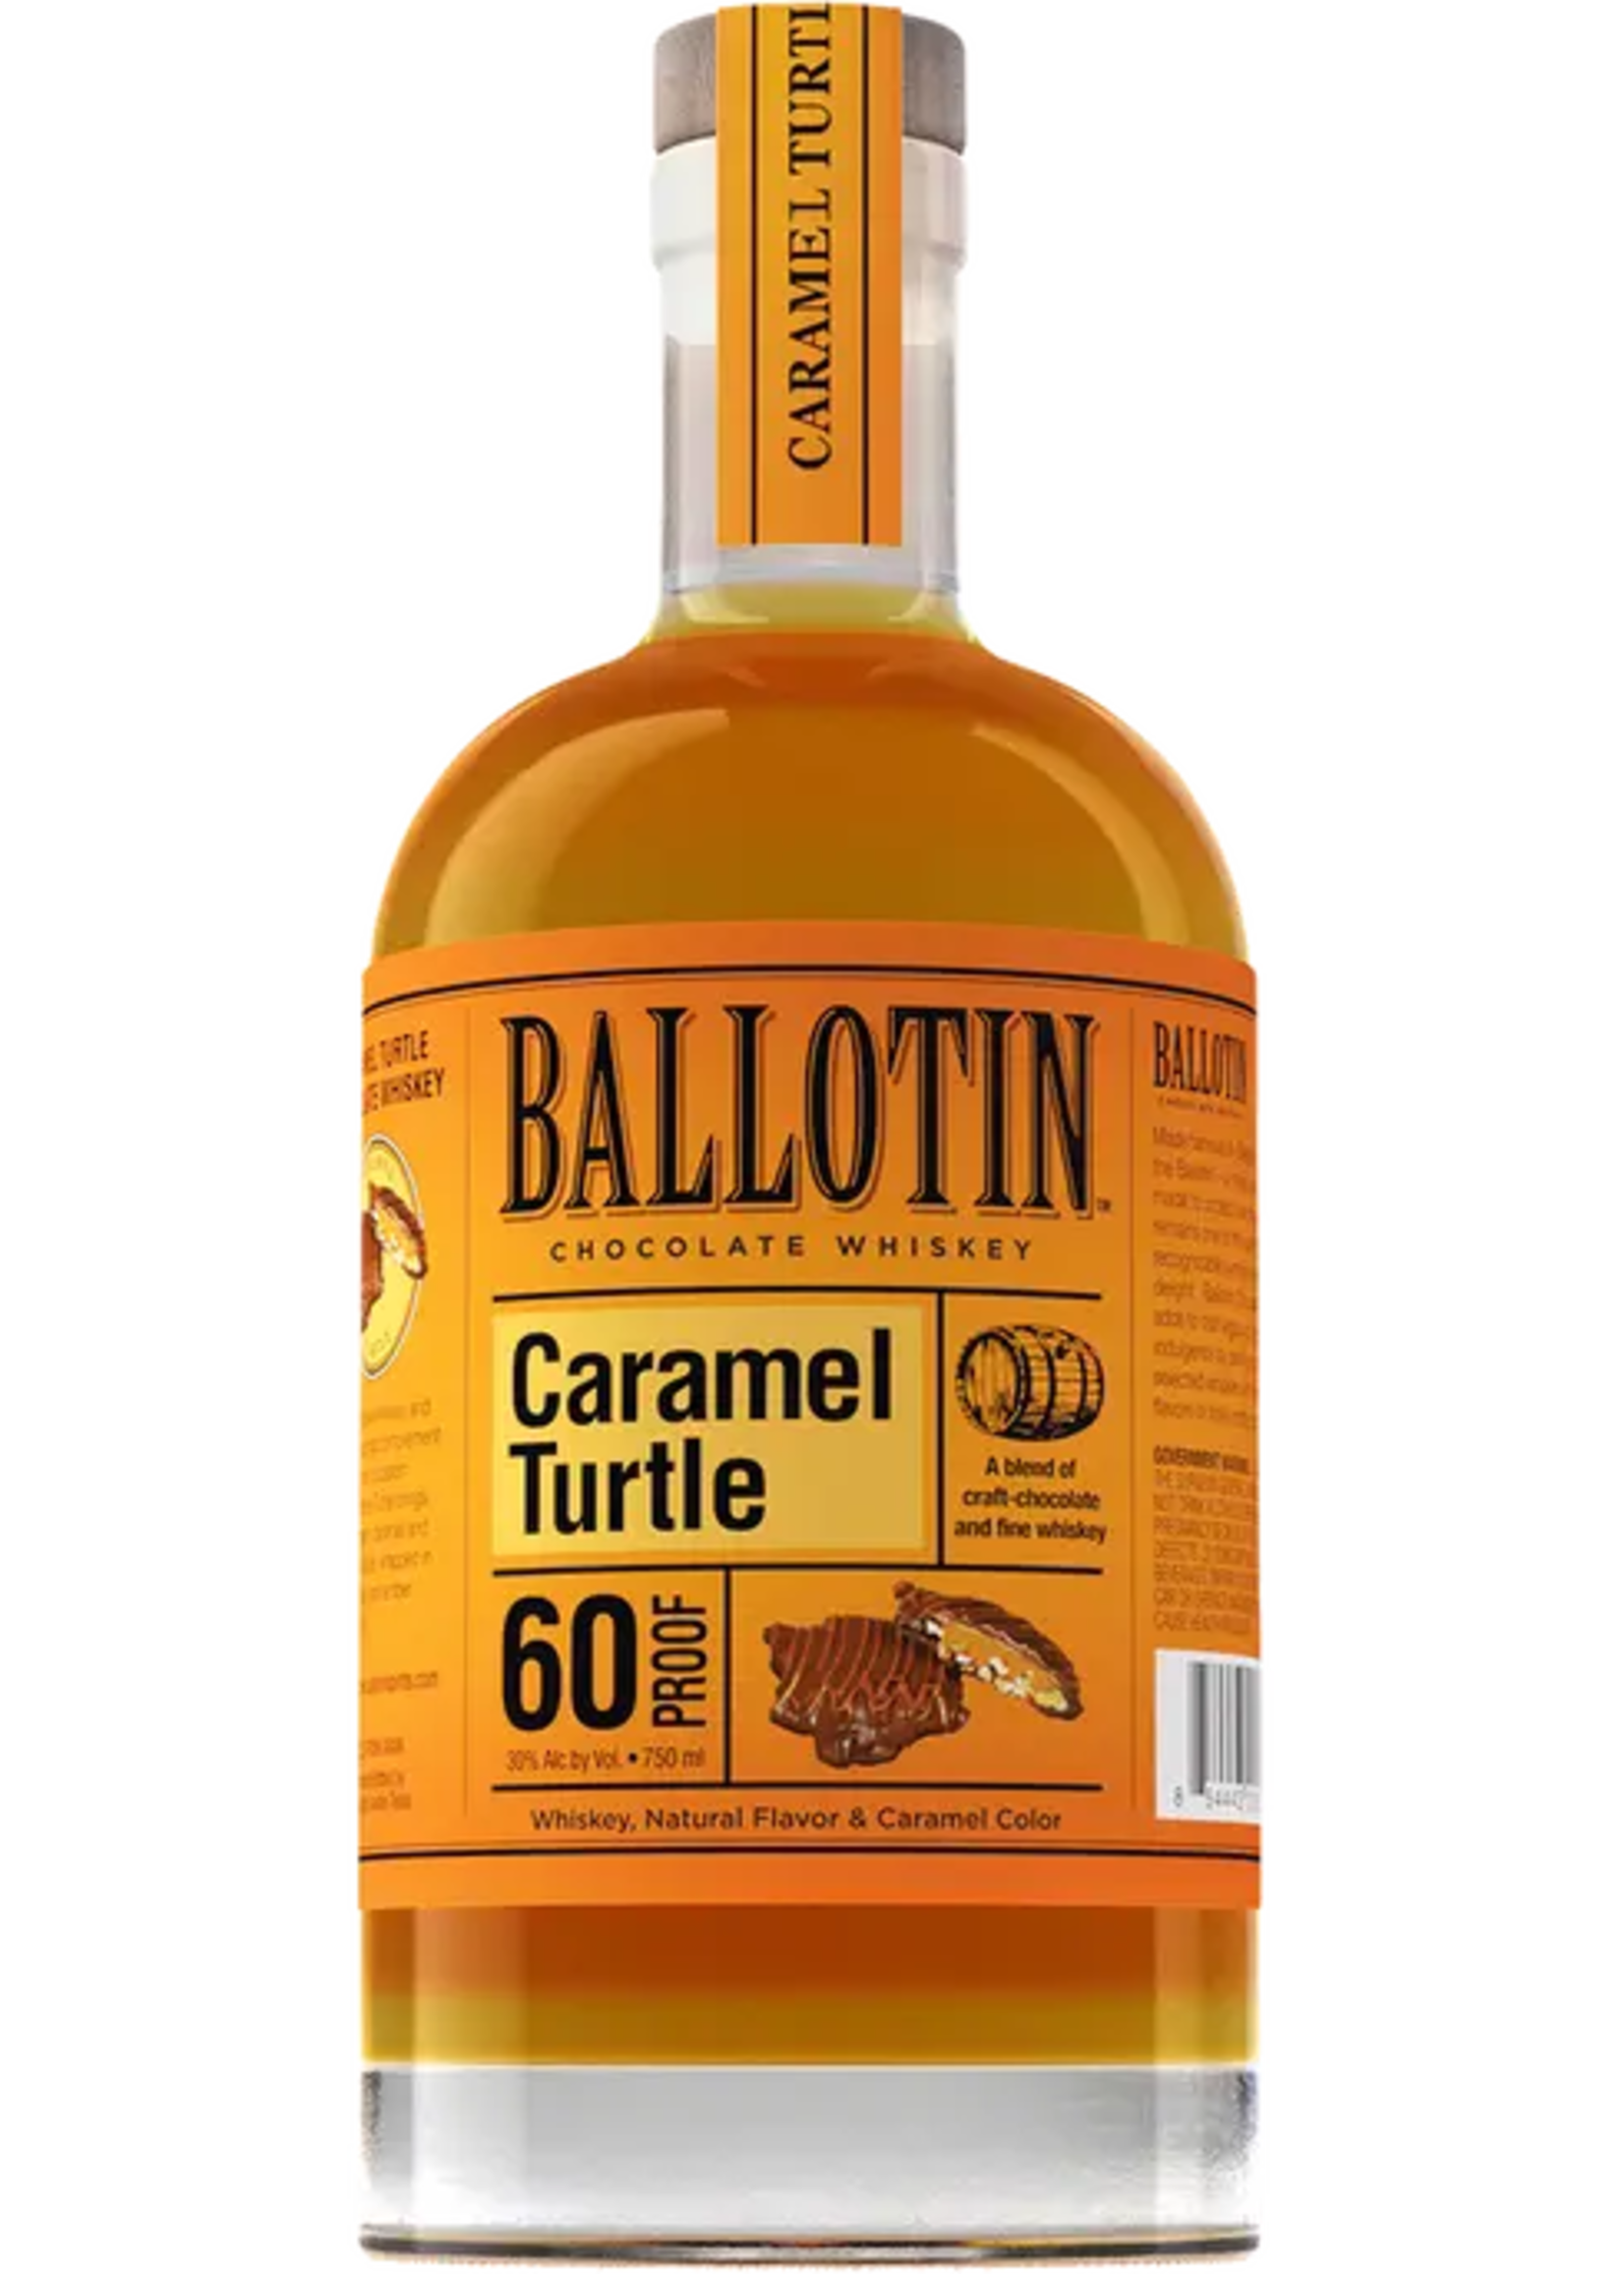 Ballotin Caramel Turtle Chocolate Whiskey 60Proof 750ml